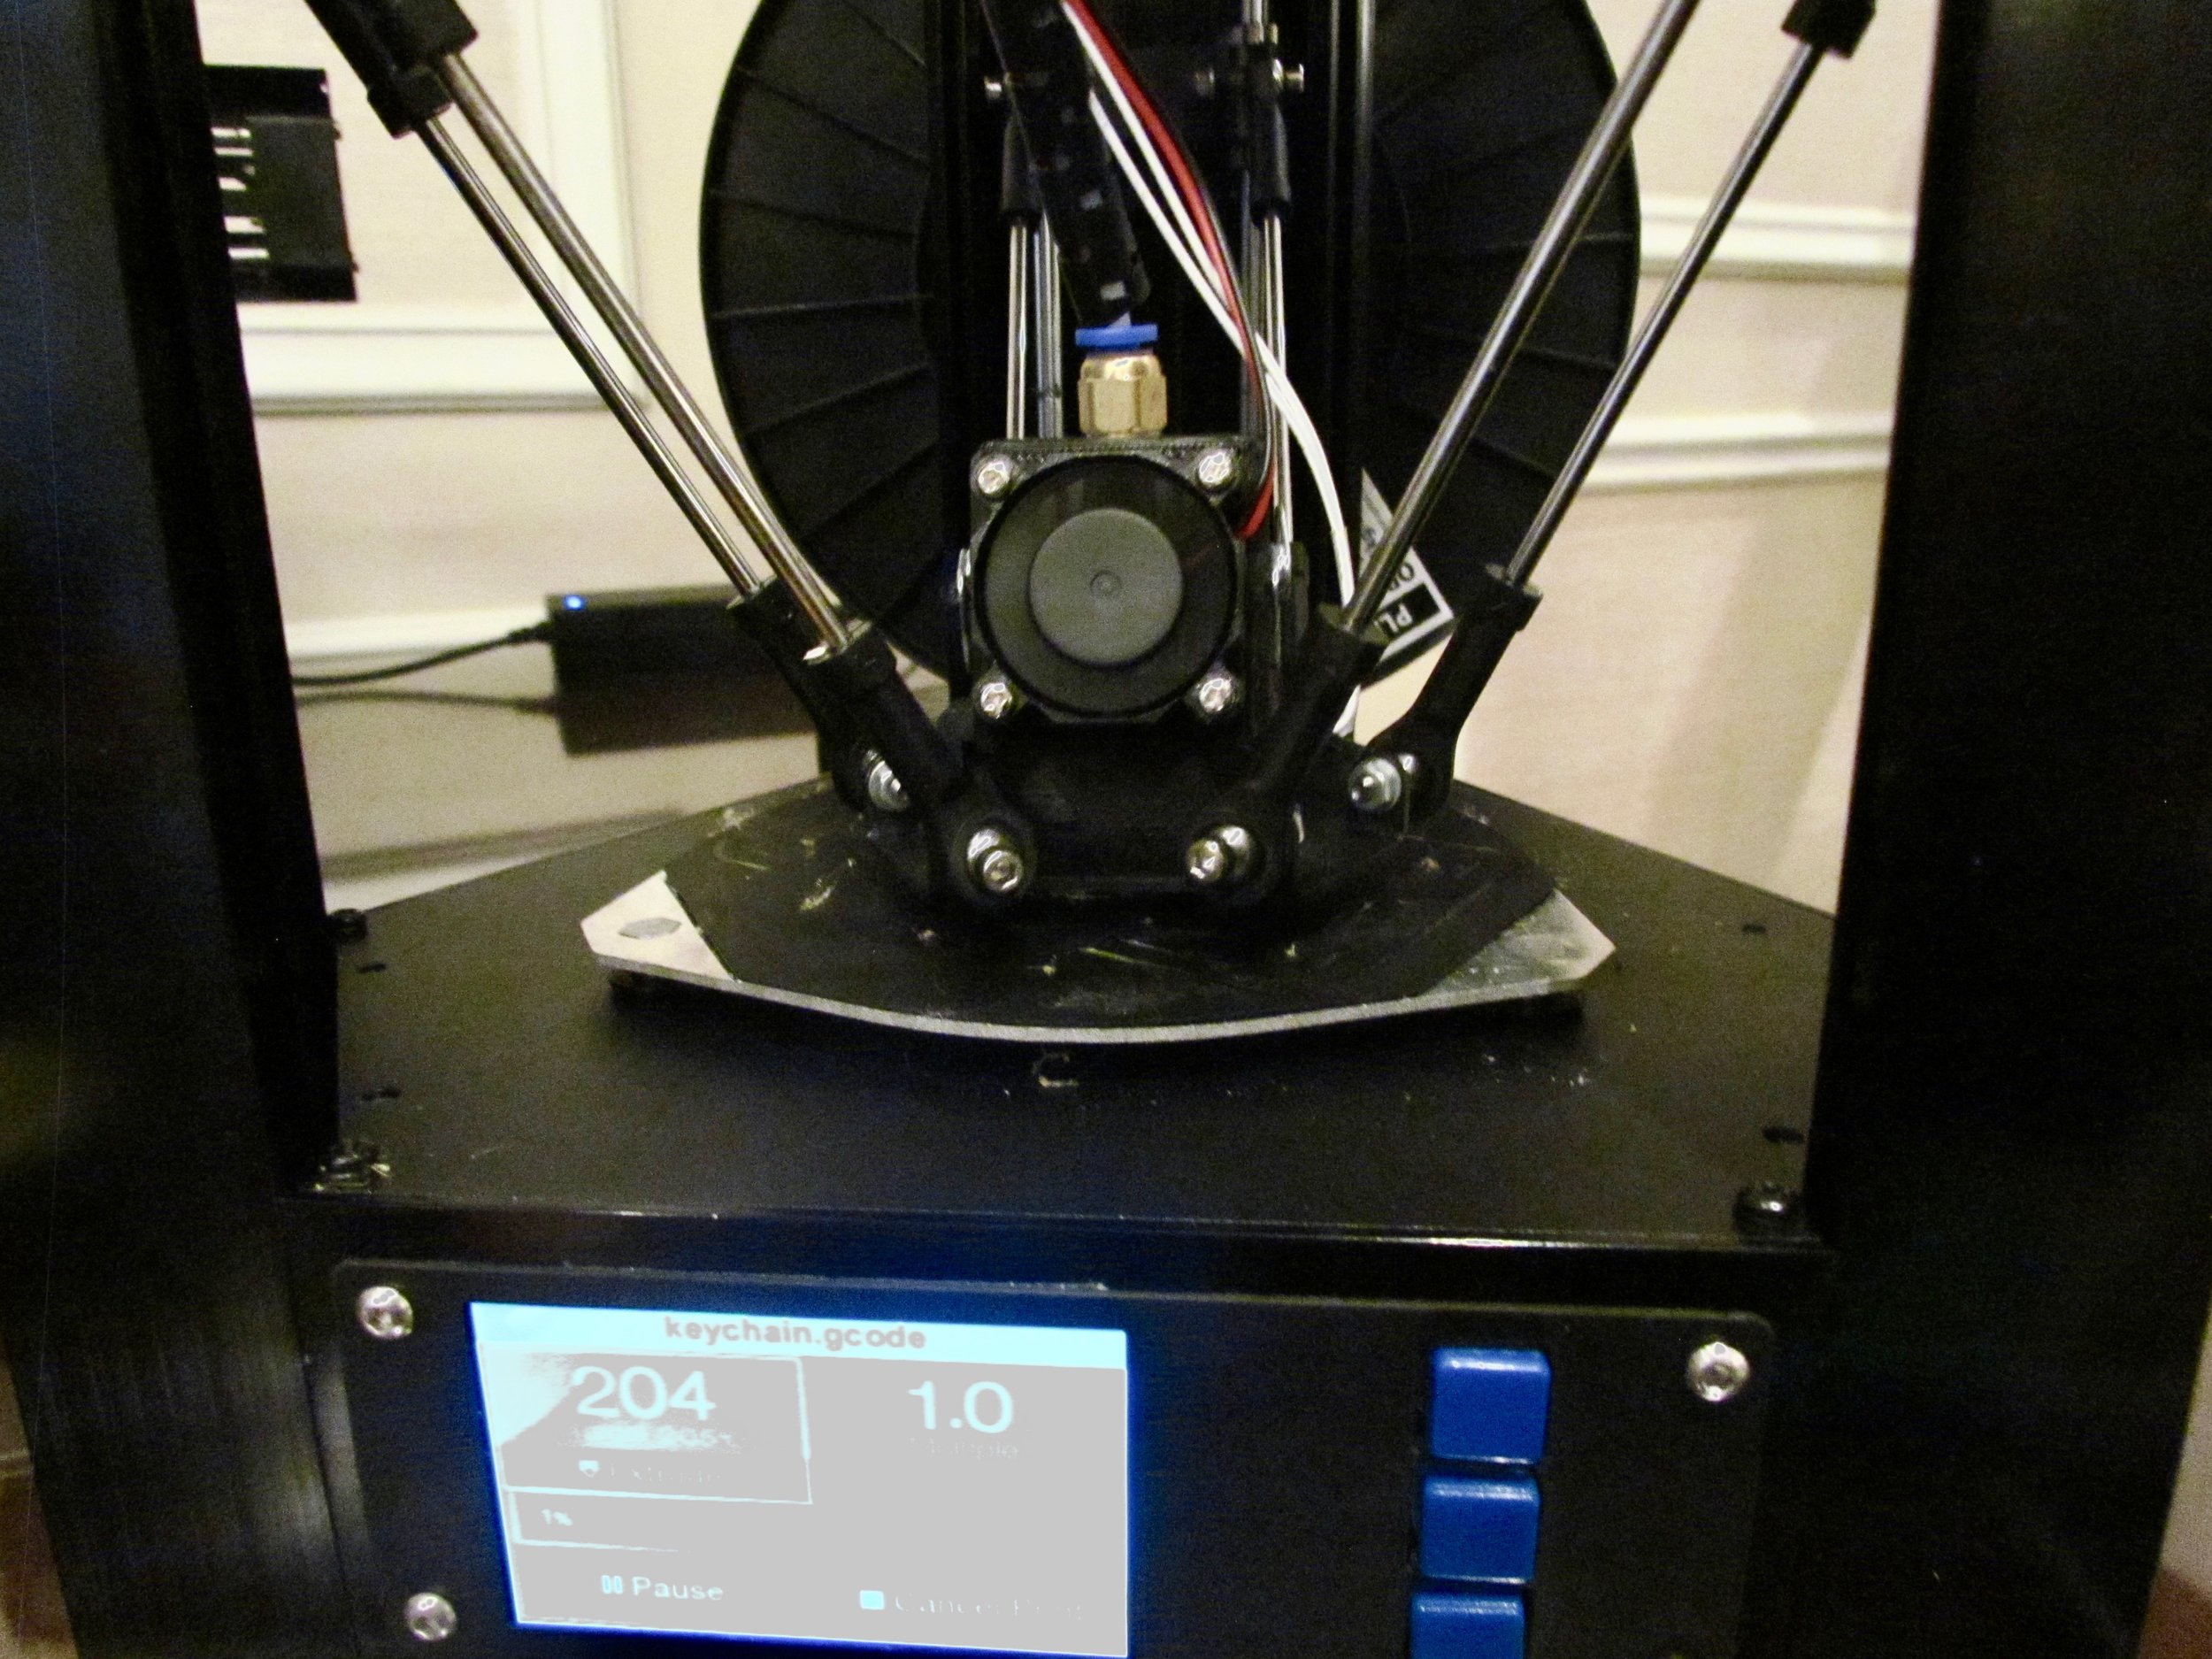  The extrusion system on the new Monoprice Delta Mini desktop 3D printer 